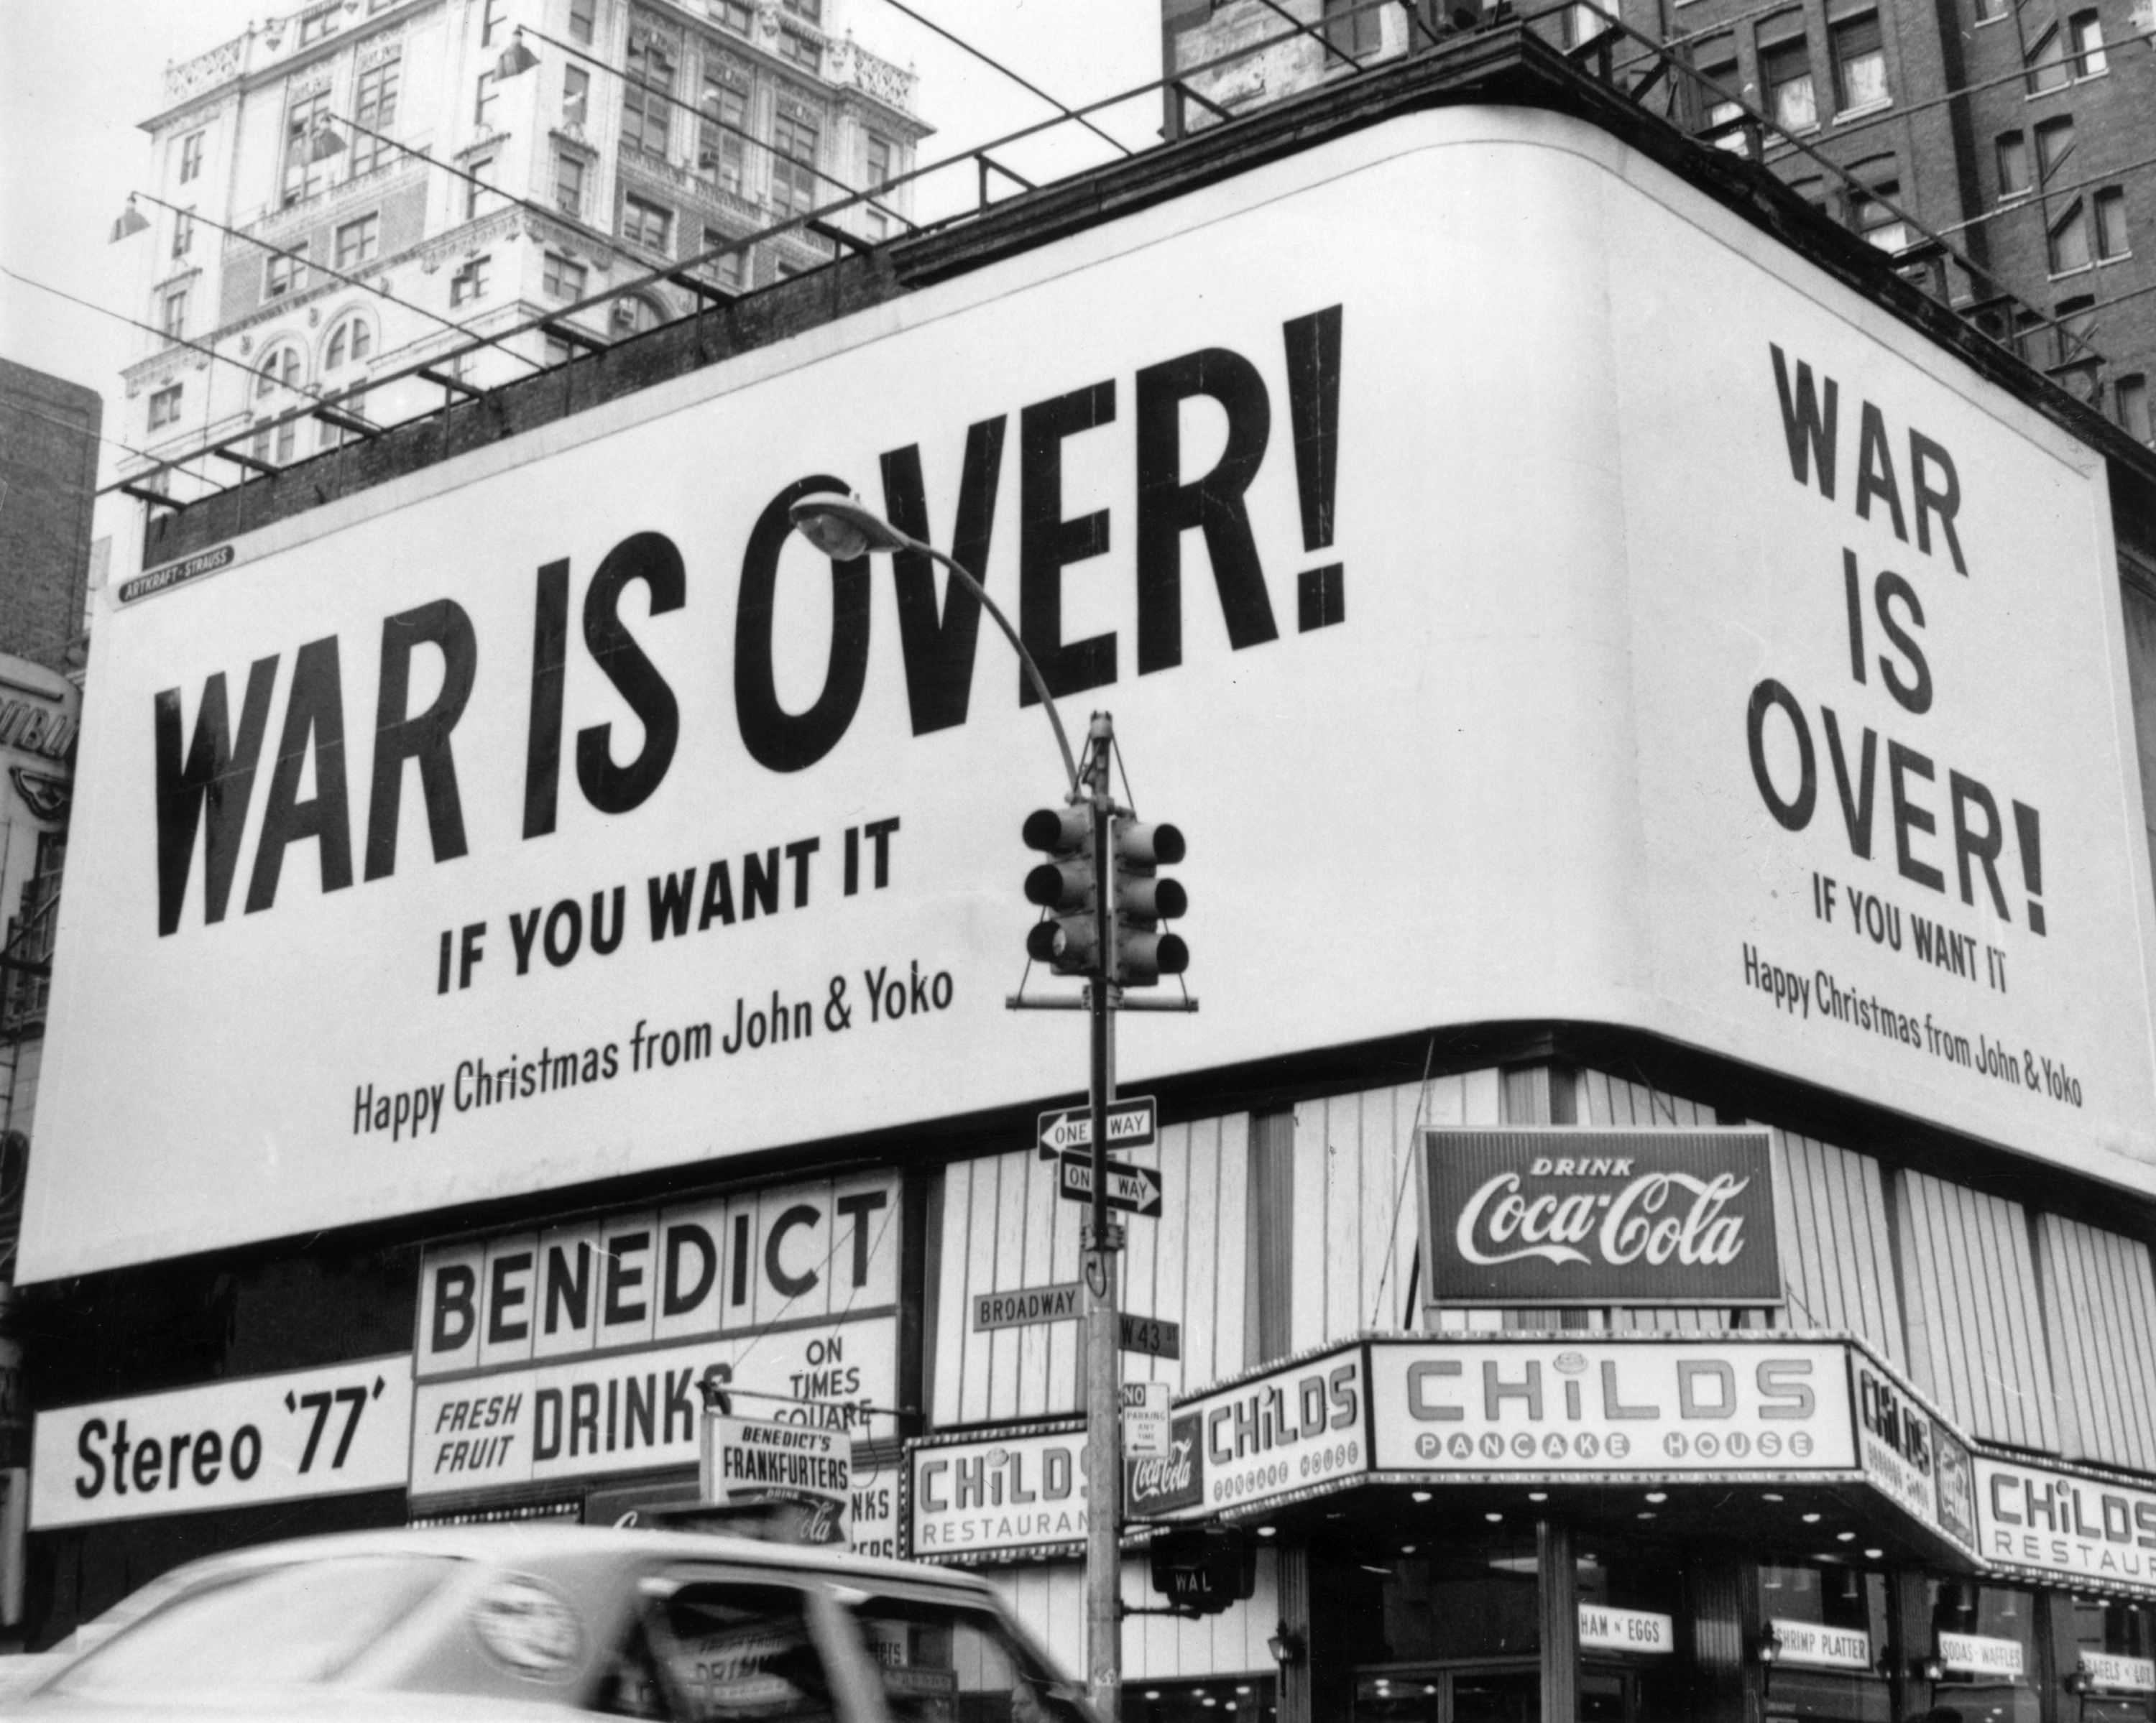 John Lennon Yoko Ono Protestors Vietnam War Poster New York City USA Building 1960s Monochrome Urban 3000x2398